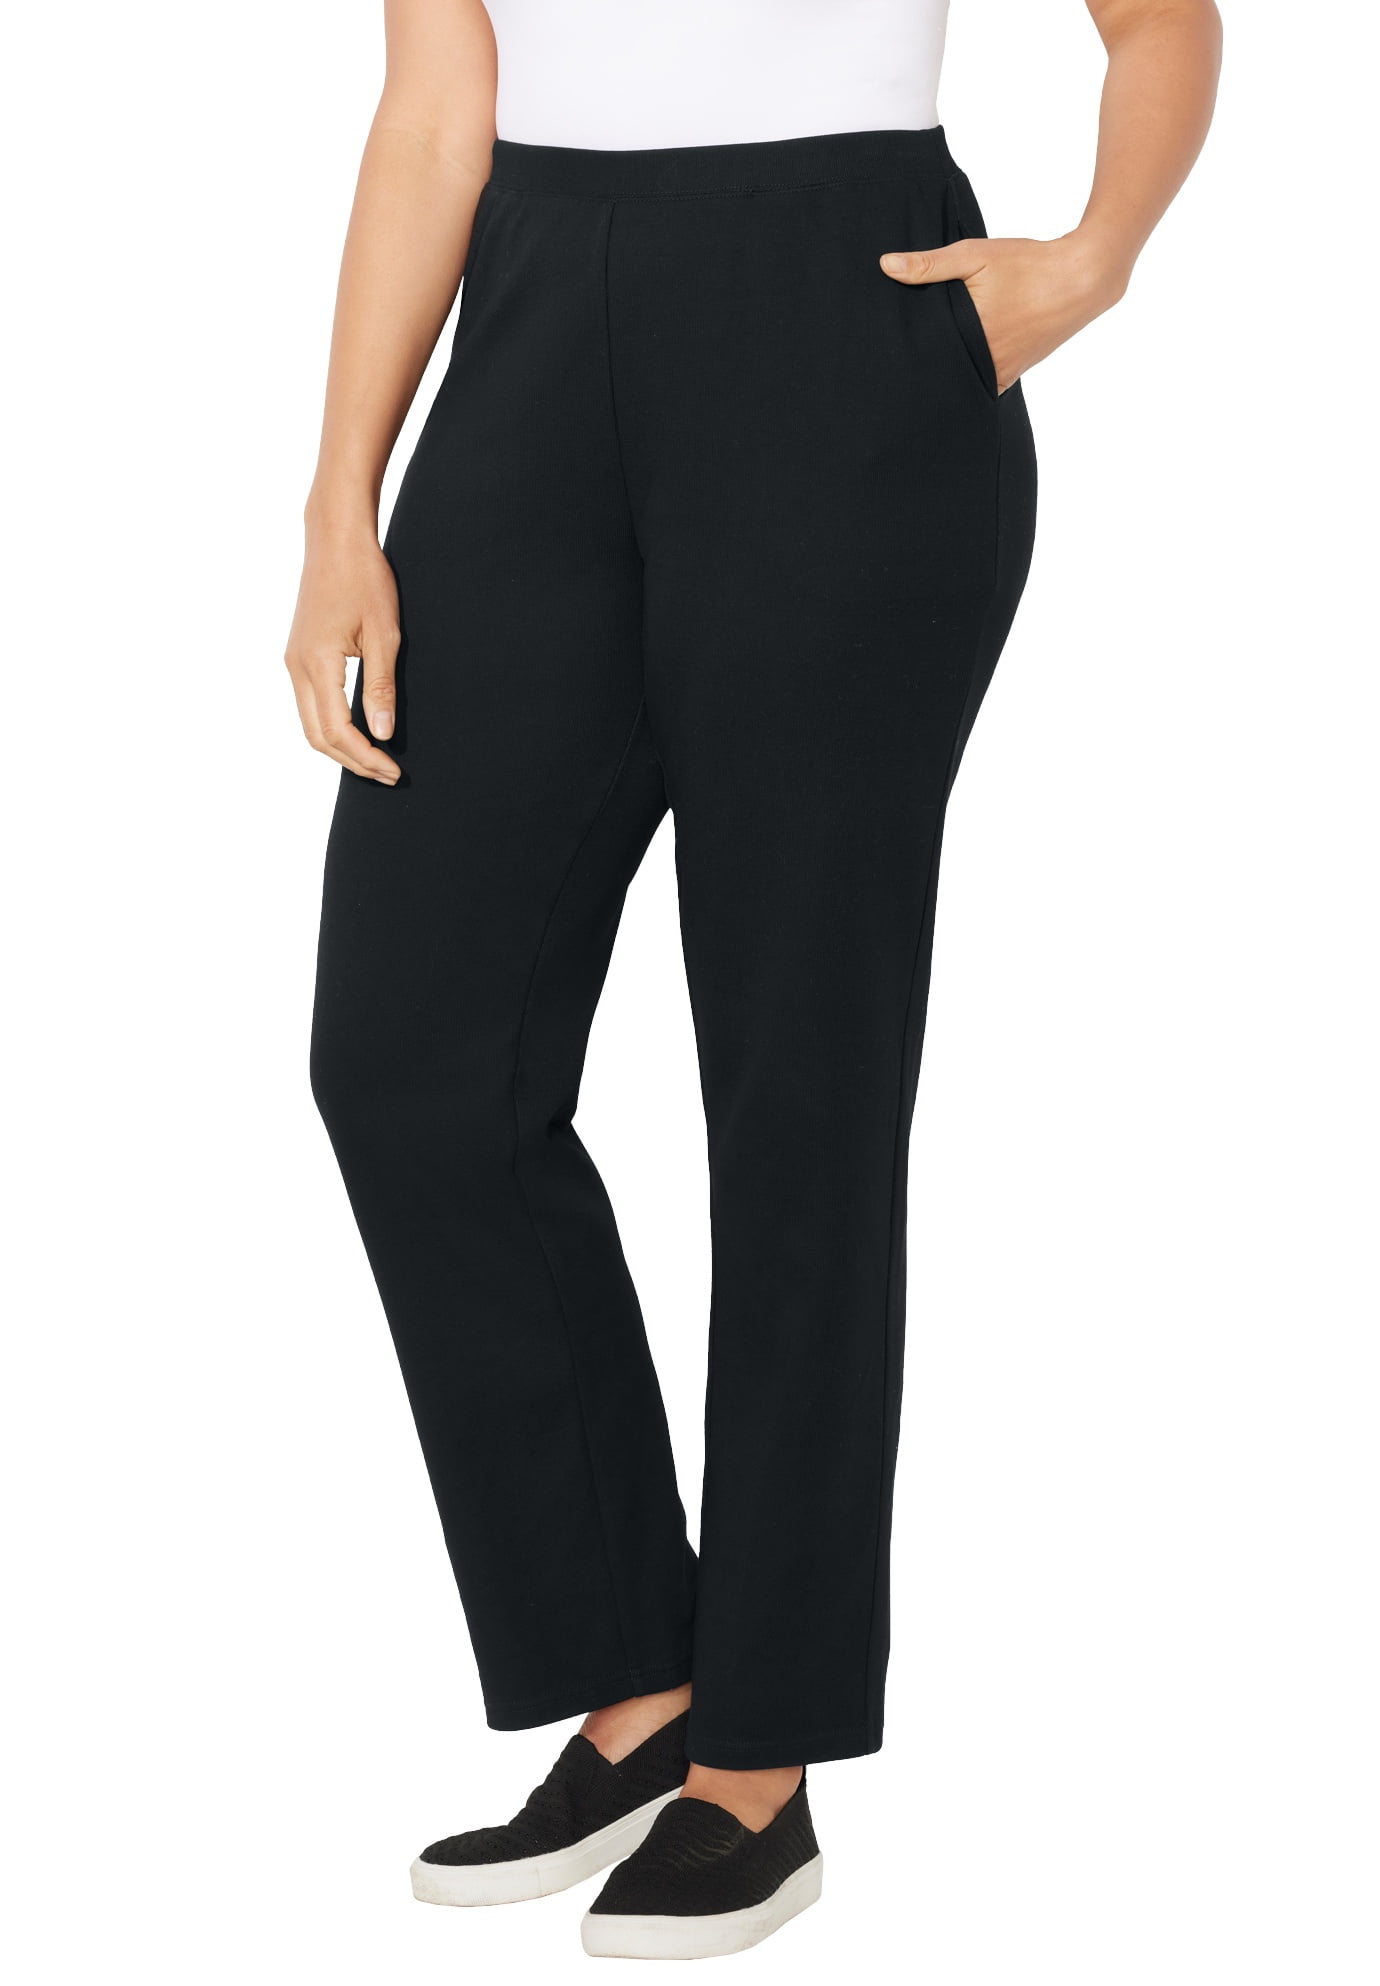 Catherines Women's Plus Size Soft-Touch Knit Pants - Walmart.com